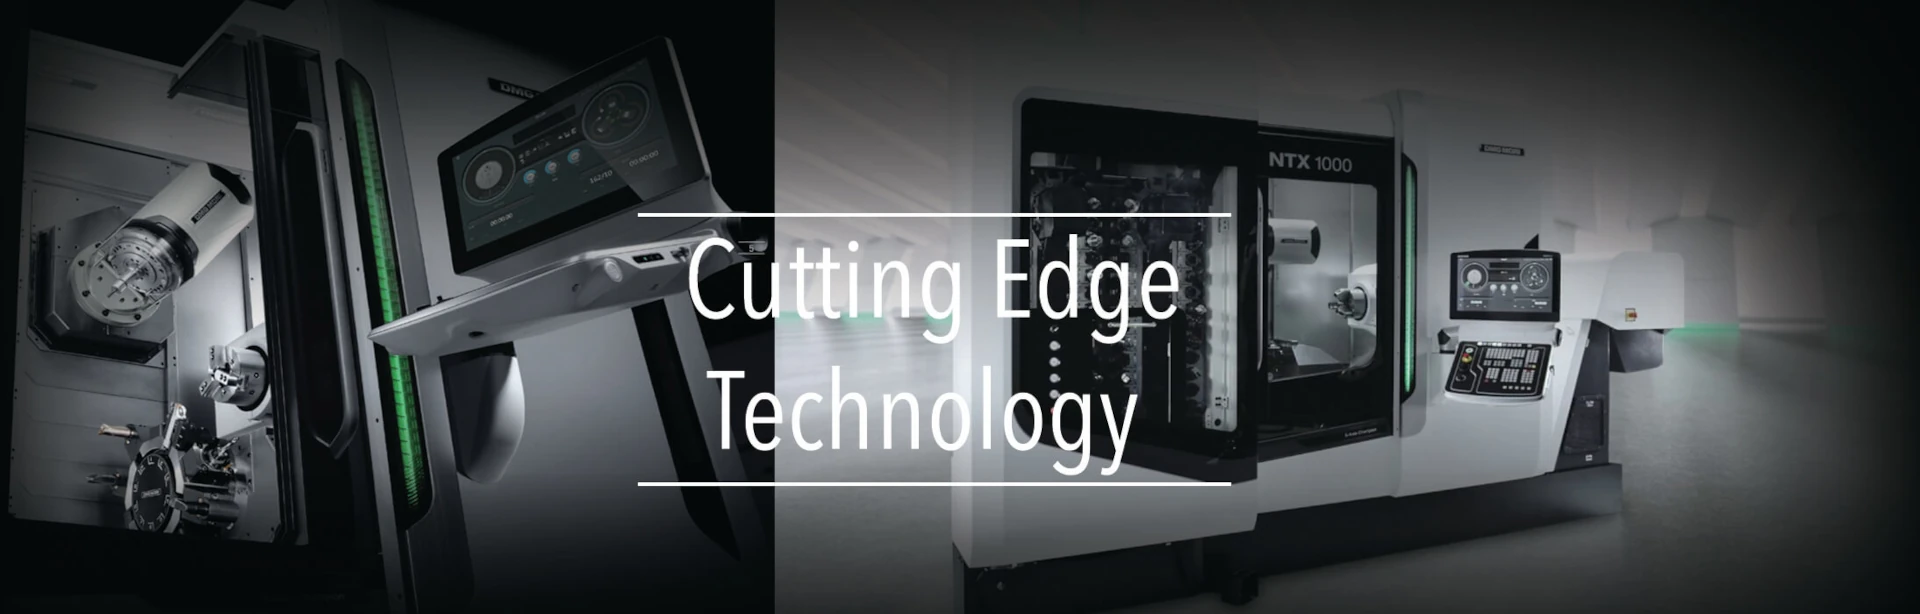 Cutting Edge technology